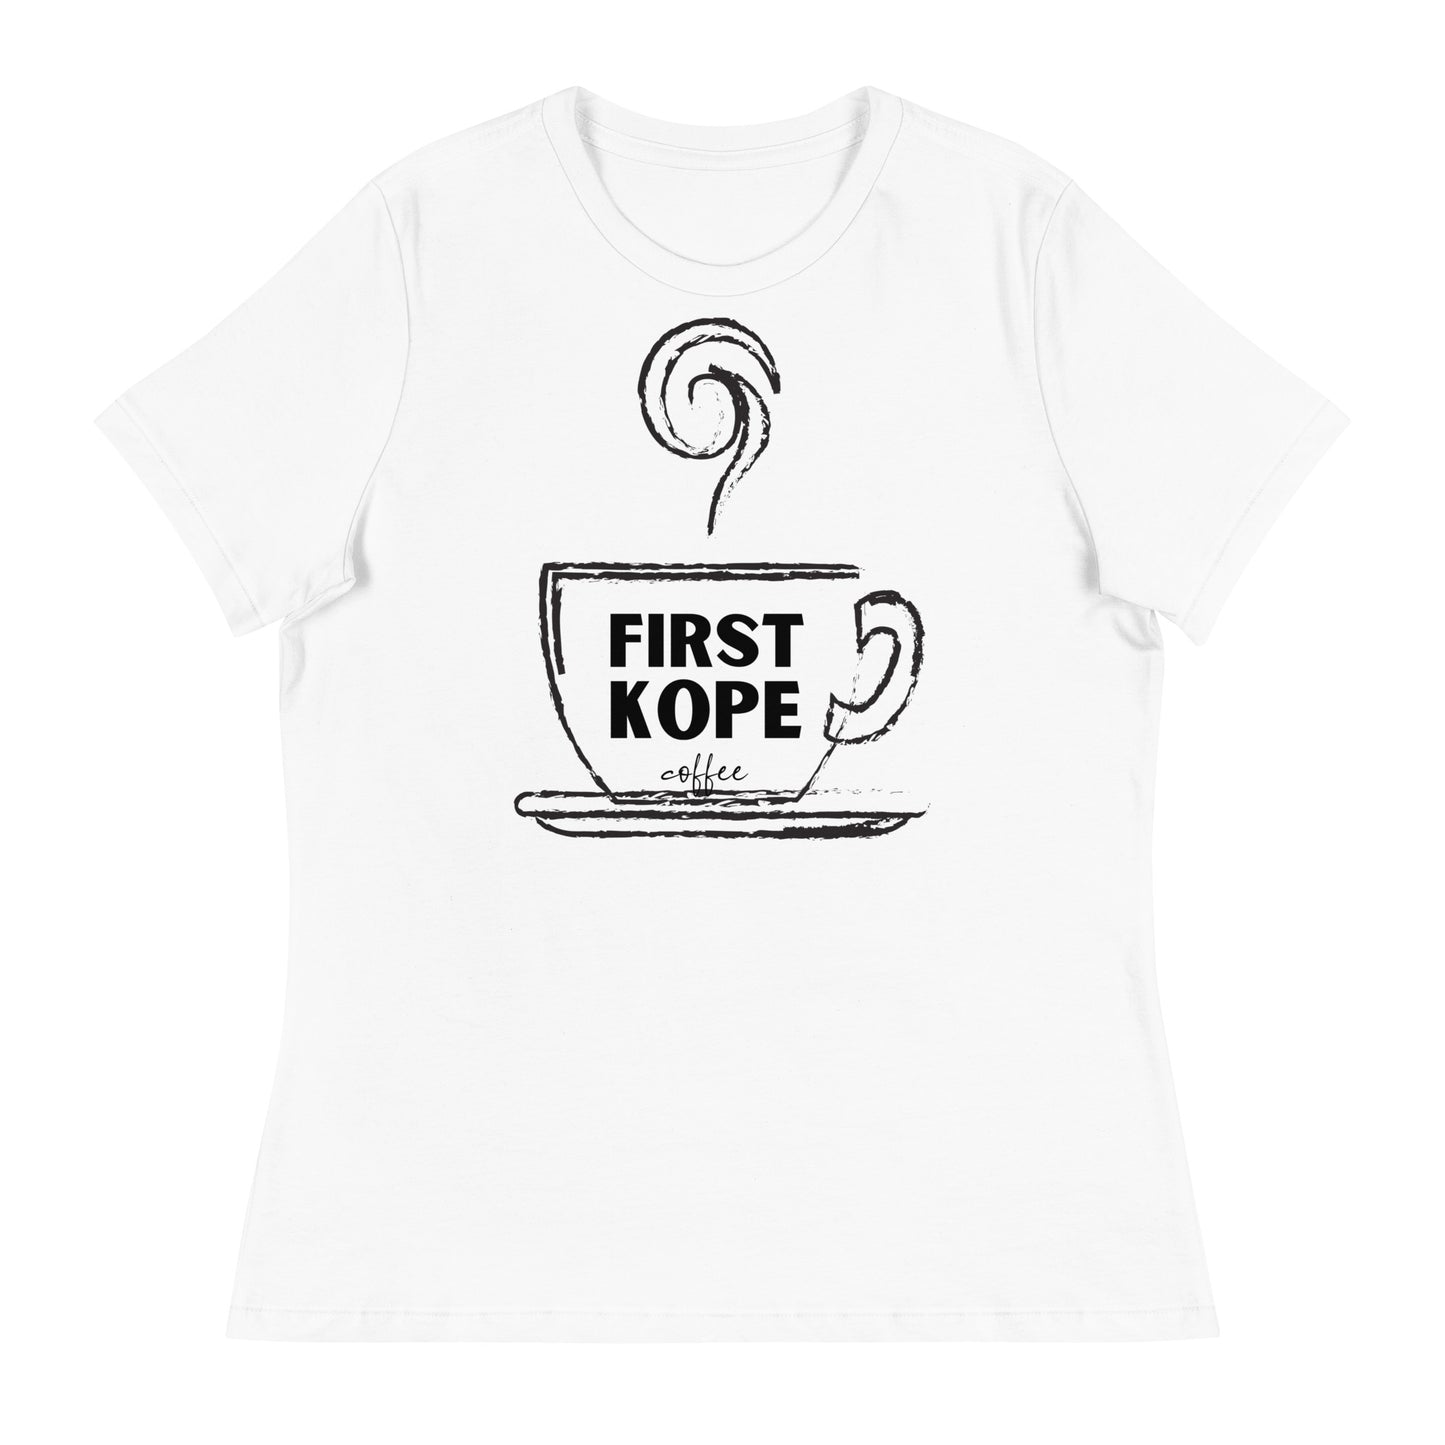 First kope (coffee) short sleeve t-shirt